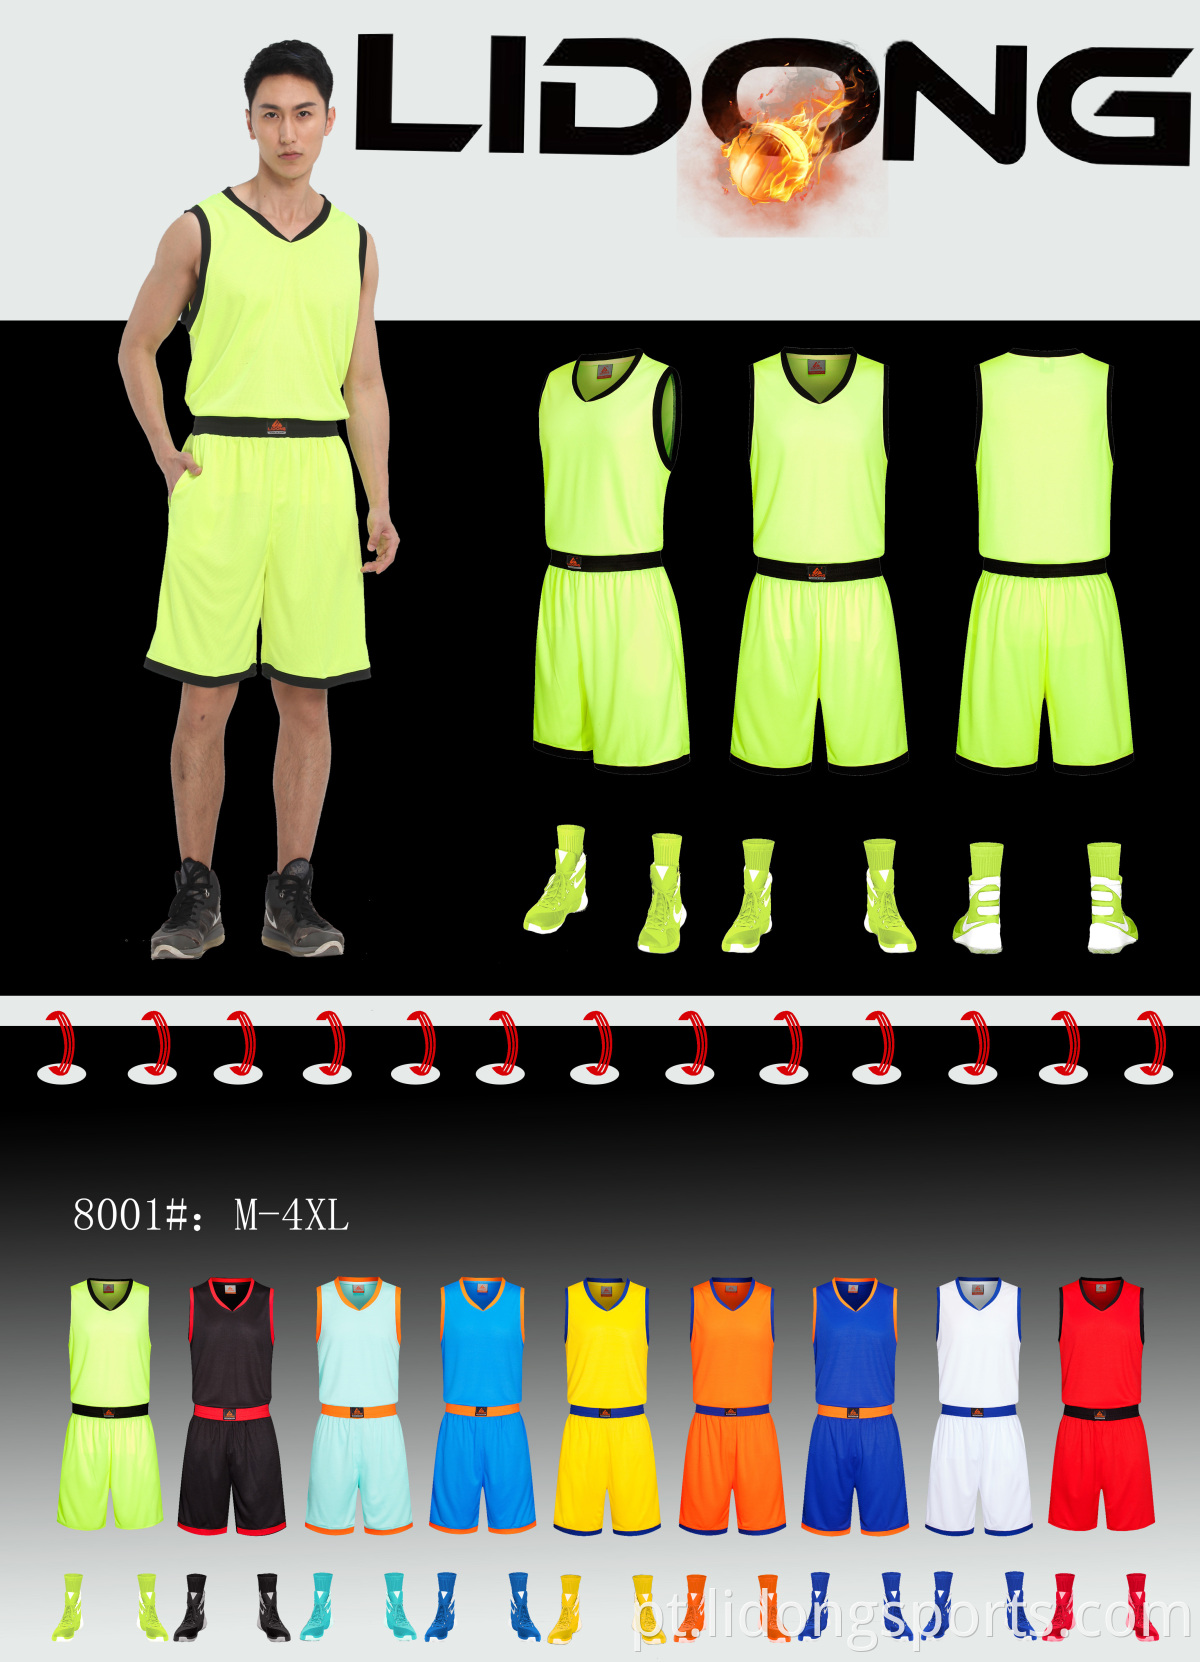 Novo novo estilo Black Basketball Jersey Uniform Design for Men